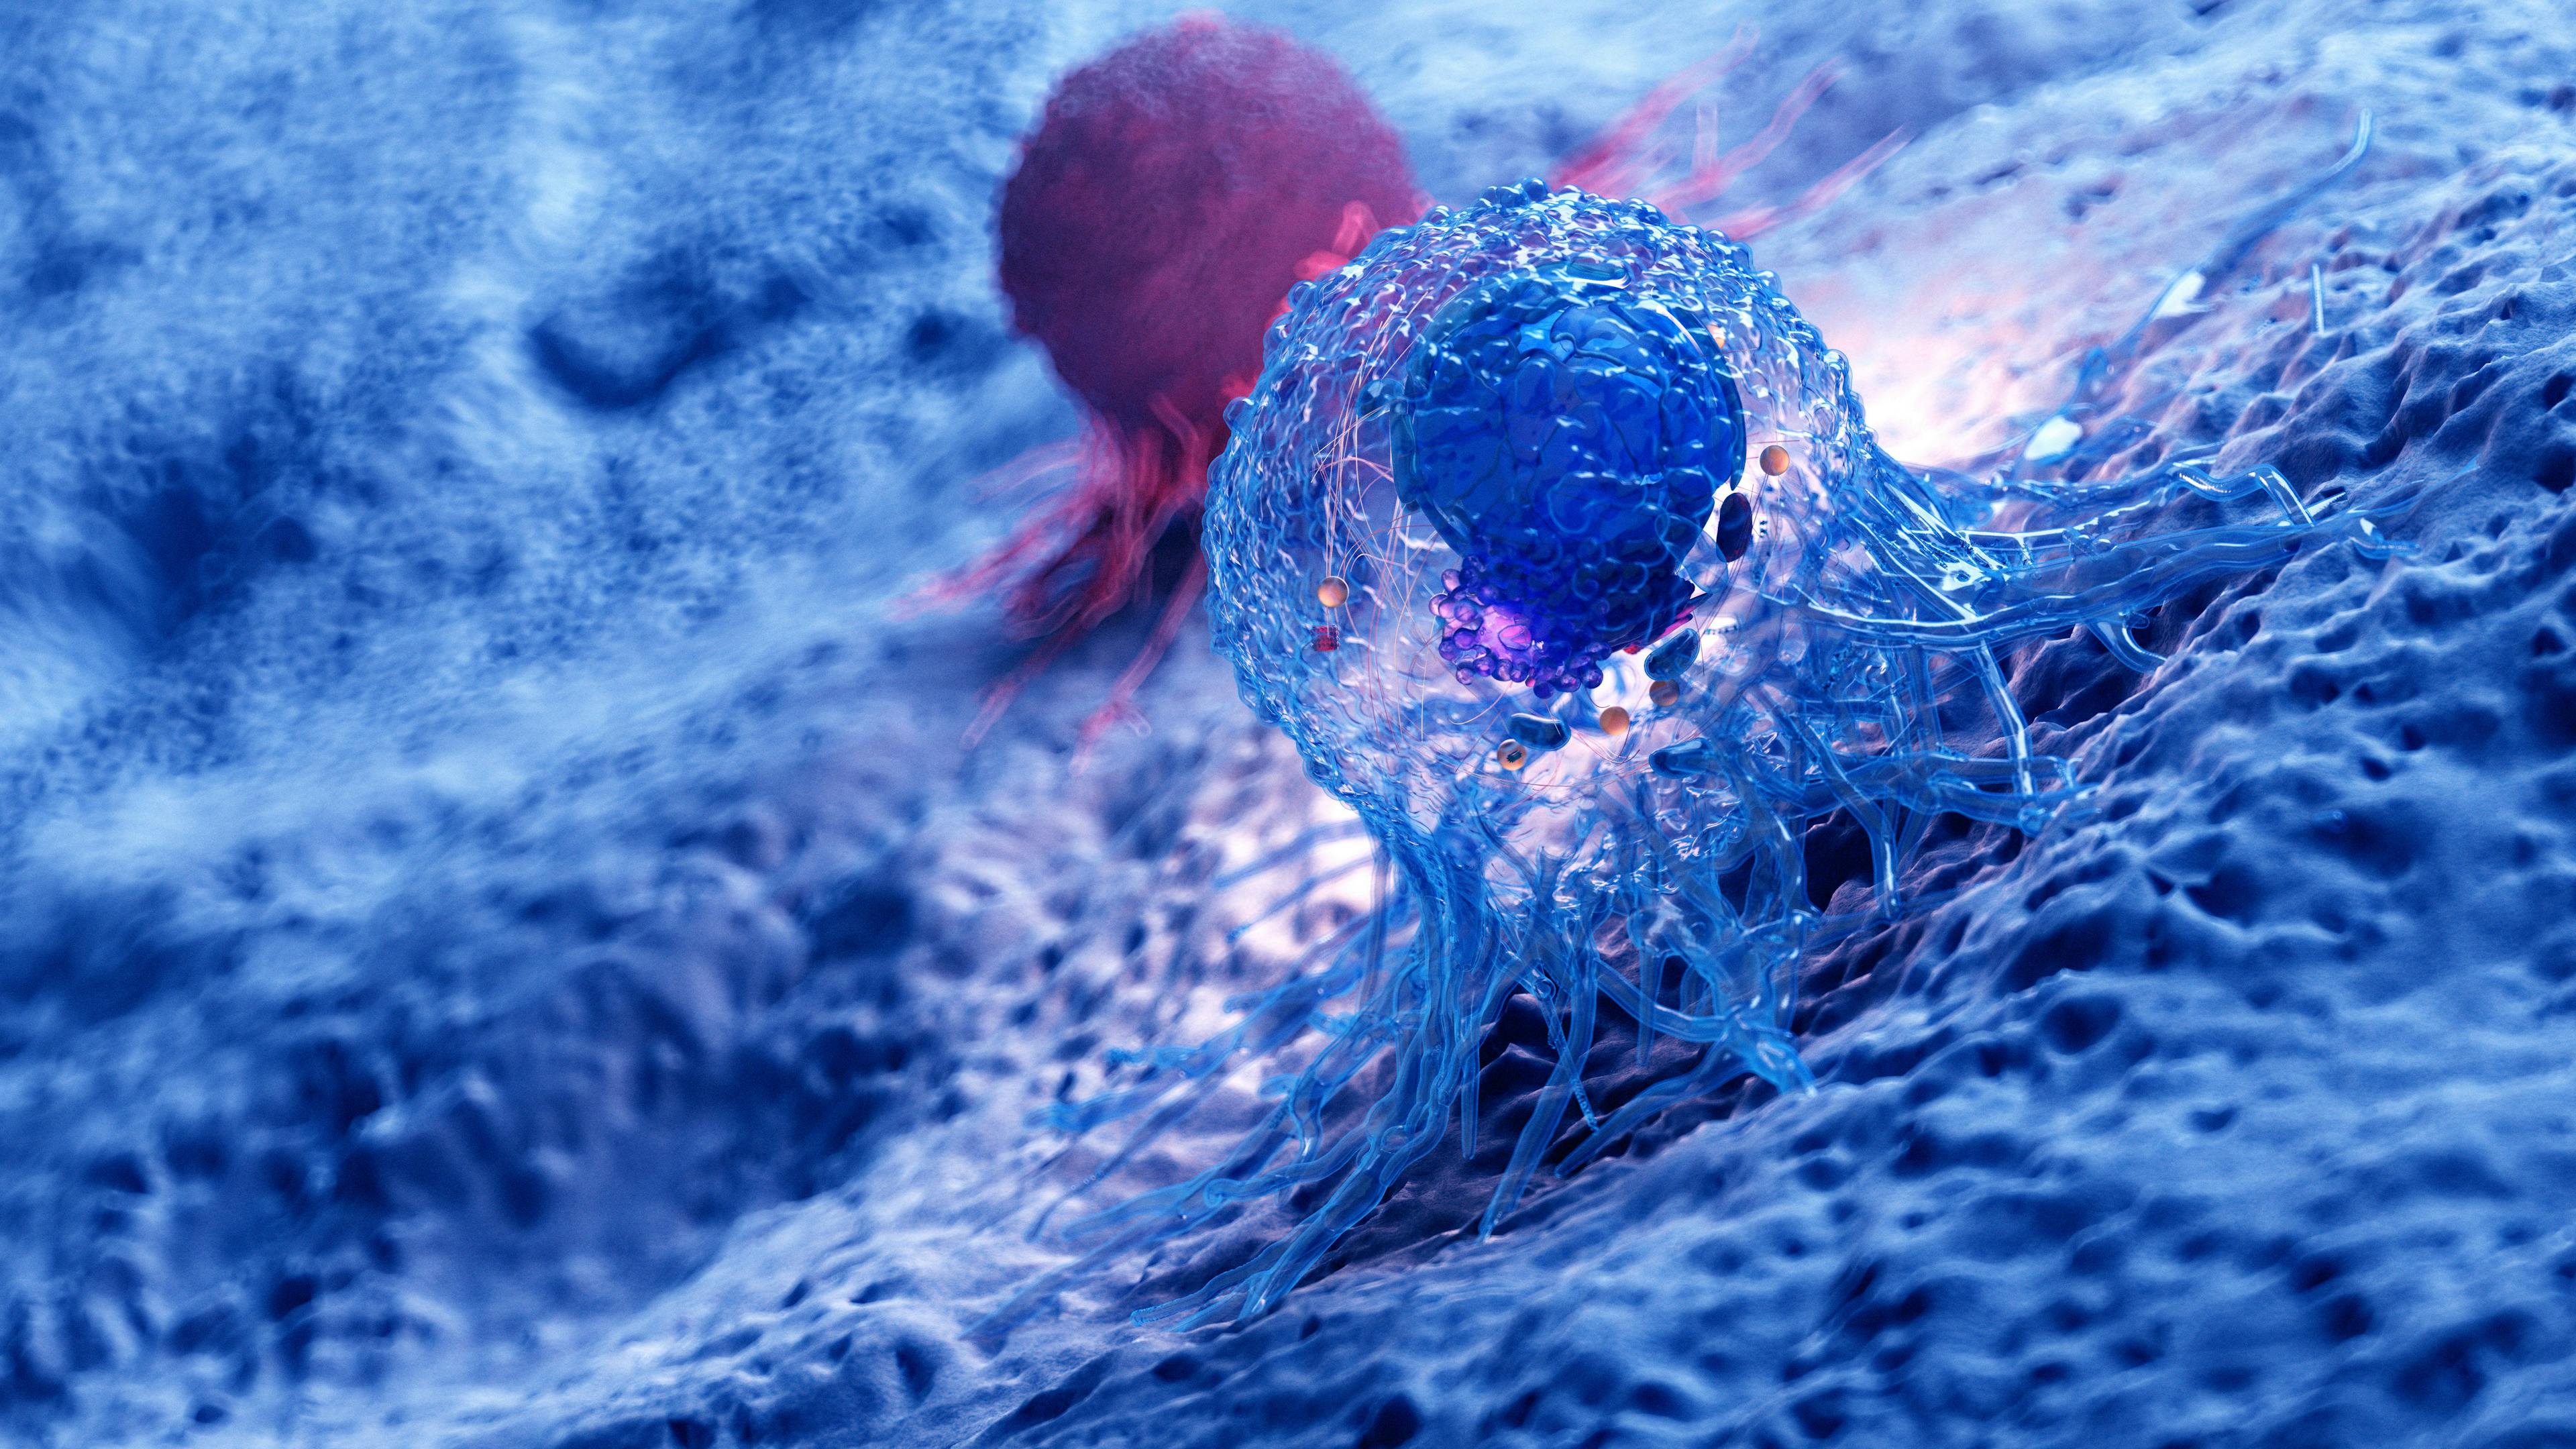 3d rendered illustration of the anatomy of a cancer cell | Image Credit: Sebastian Kaulitzki - stock.adobe.com